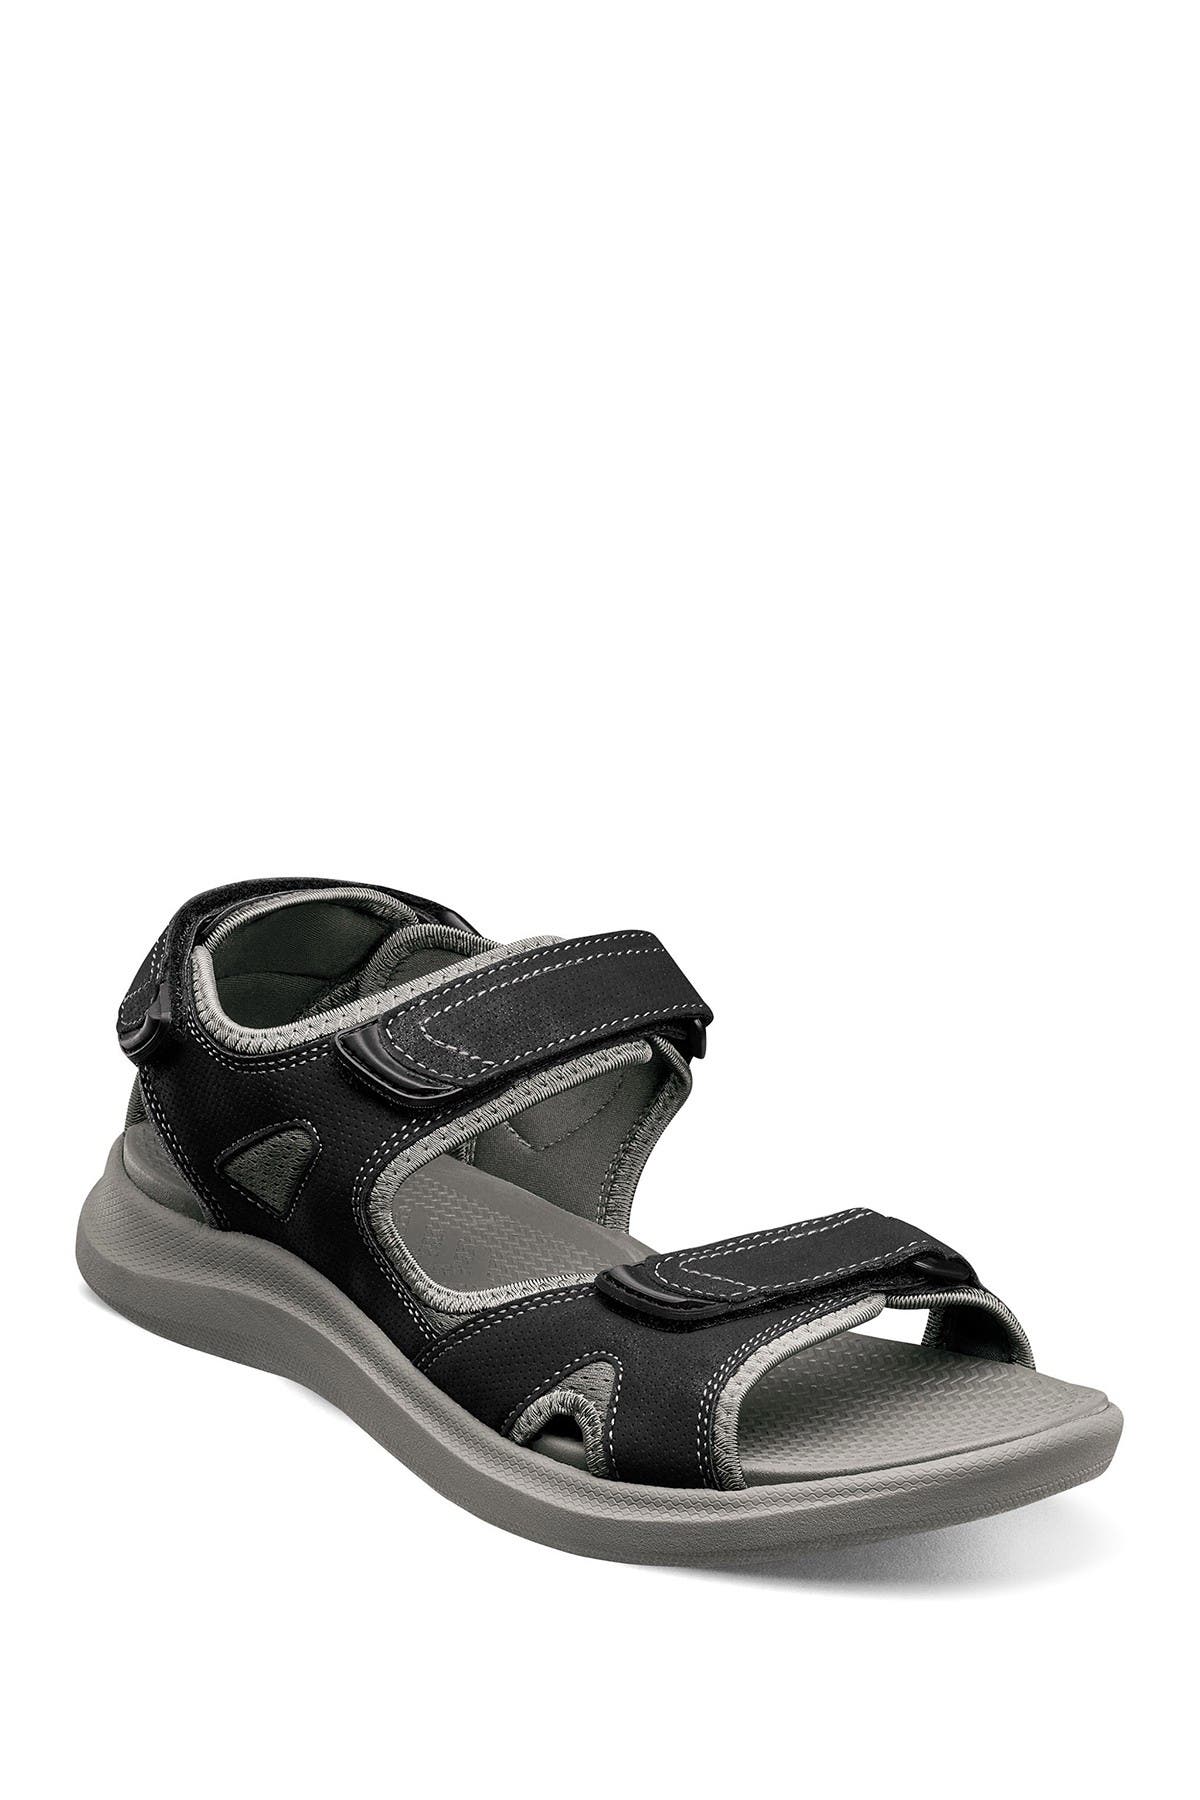 Nunn Bush Rio Vista 3-strap Sandal In Blk Multi